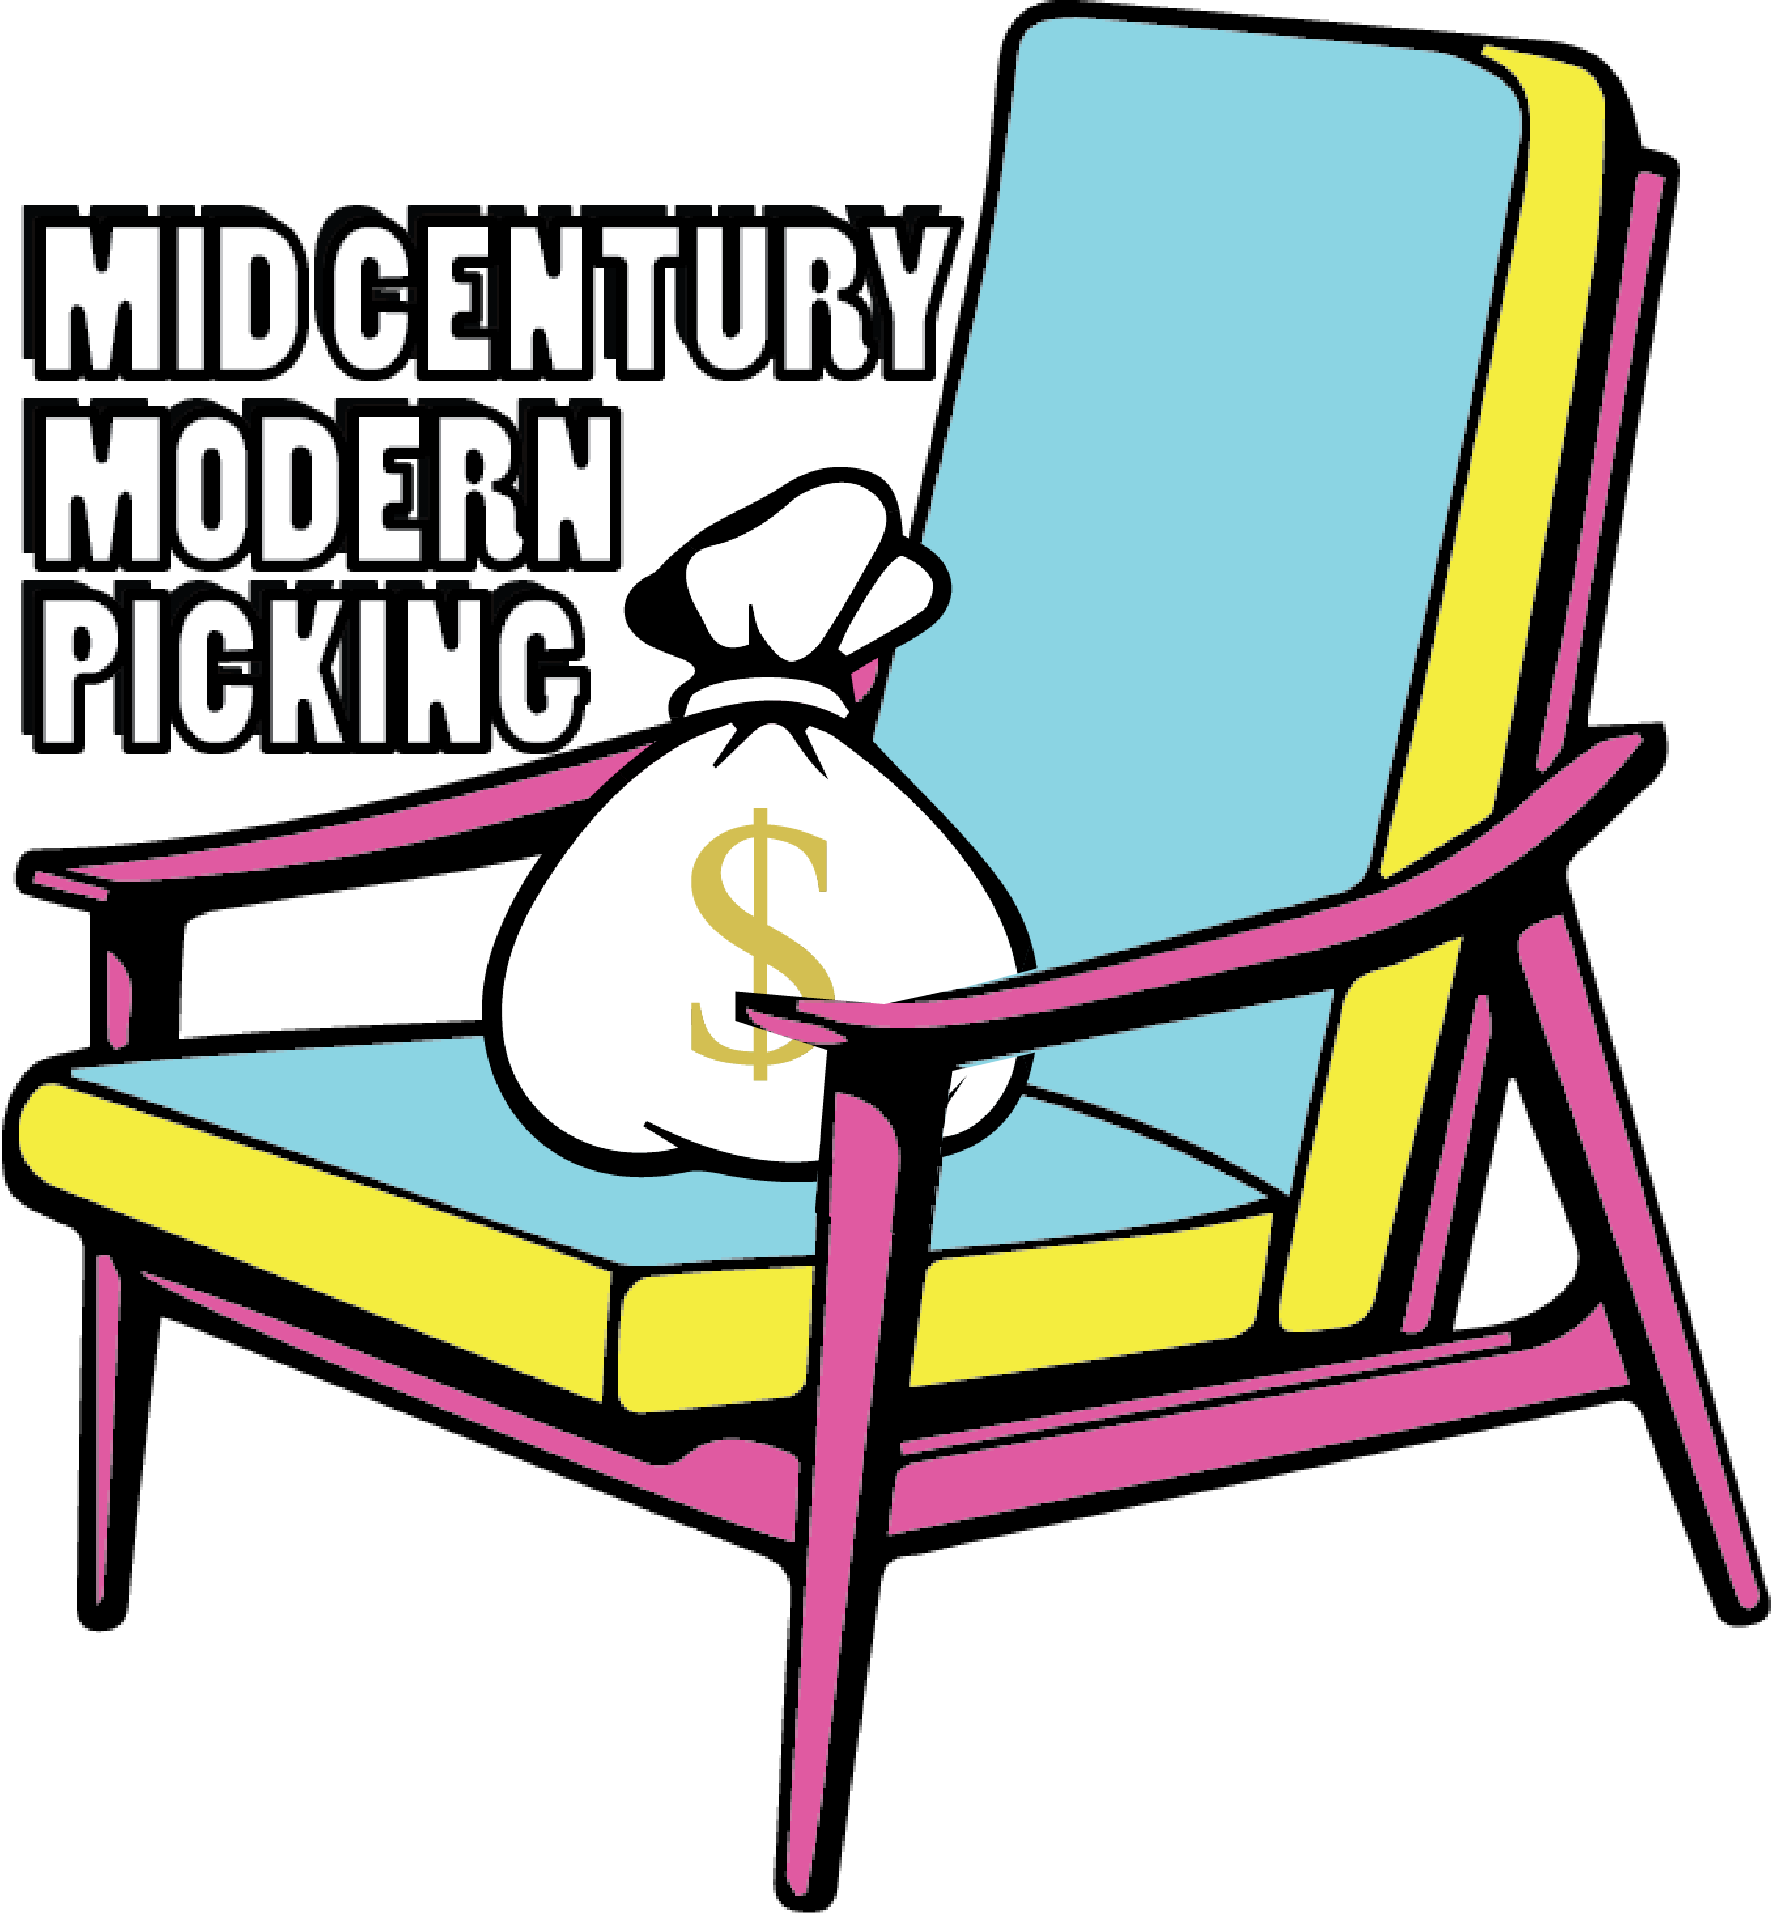 Mid Century Modern Furniture - Mid Century Modern Furniture (1771x1913)